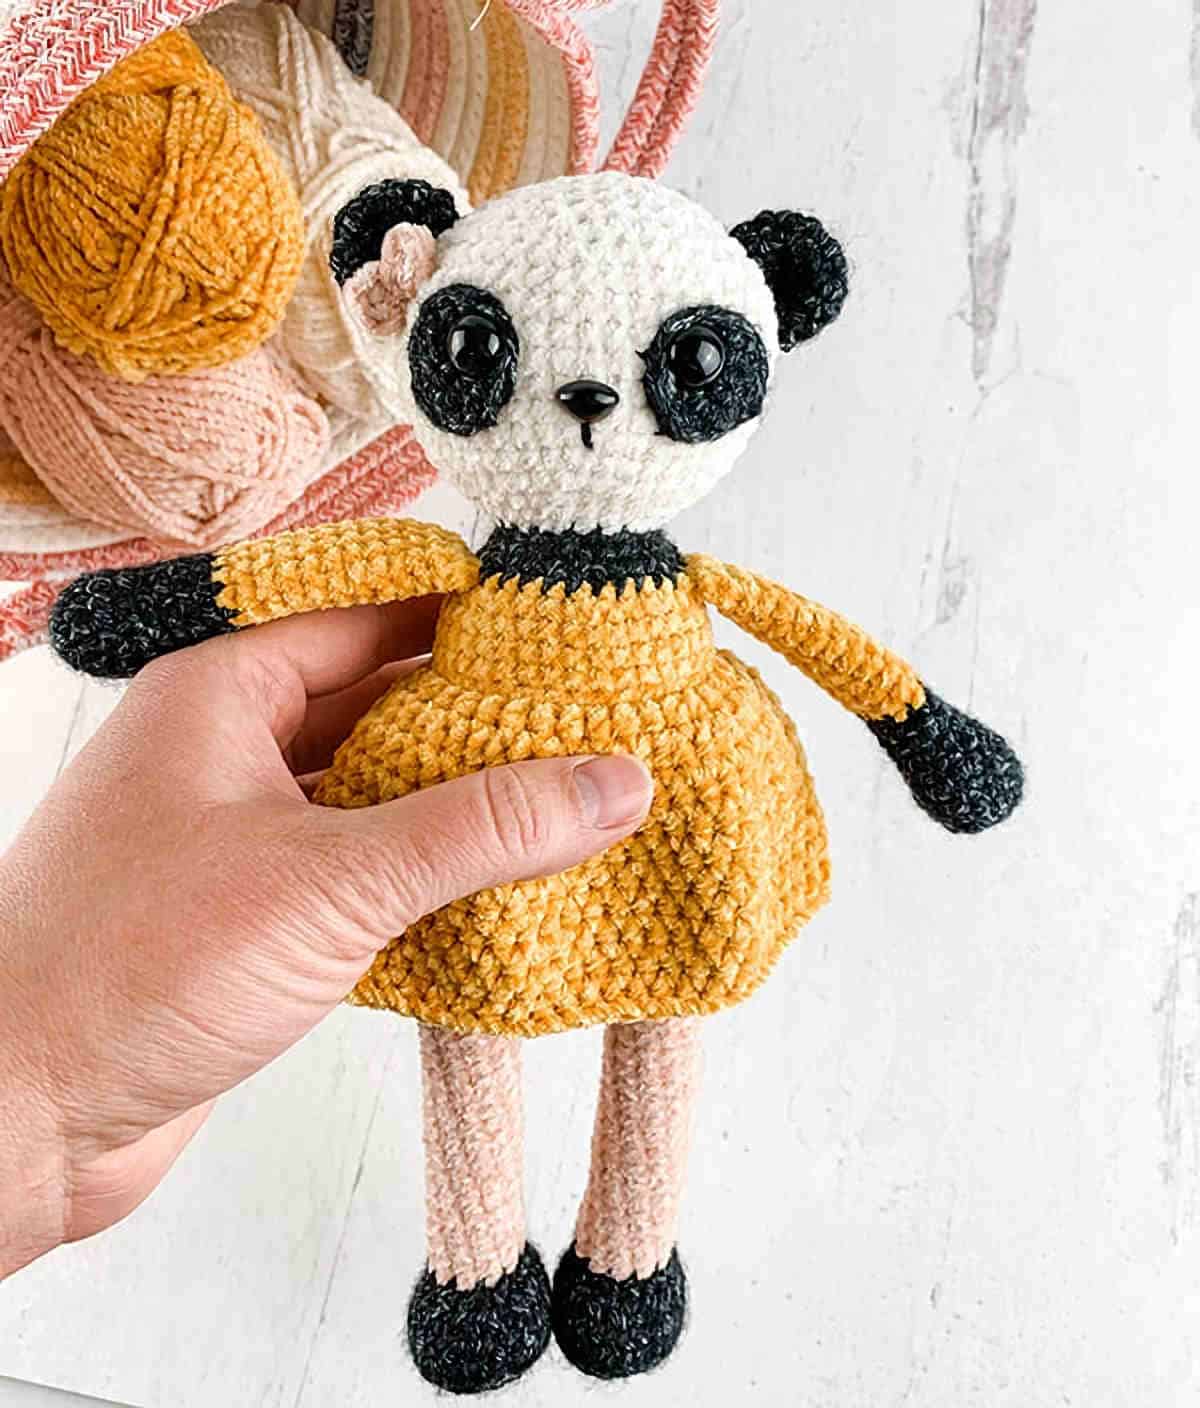 Crochet panda toy in yellow dress.